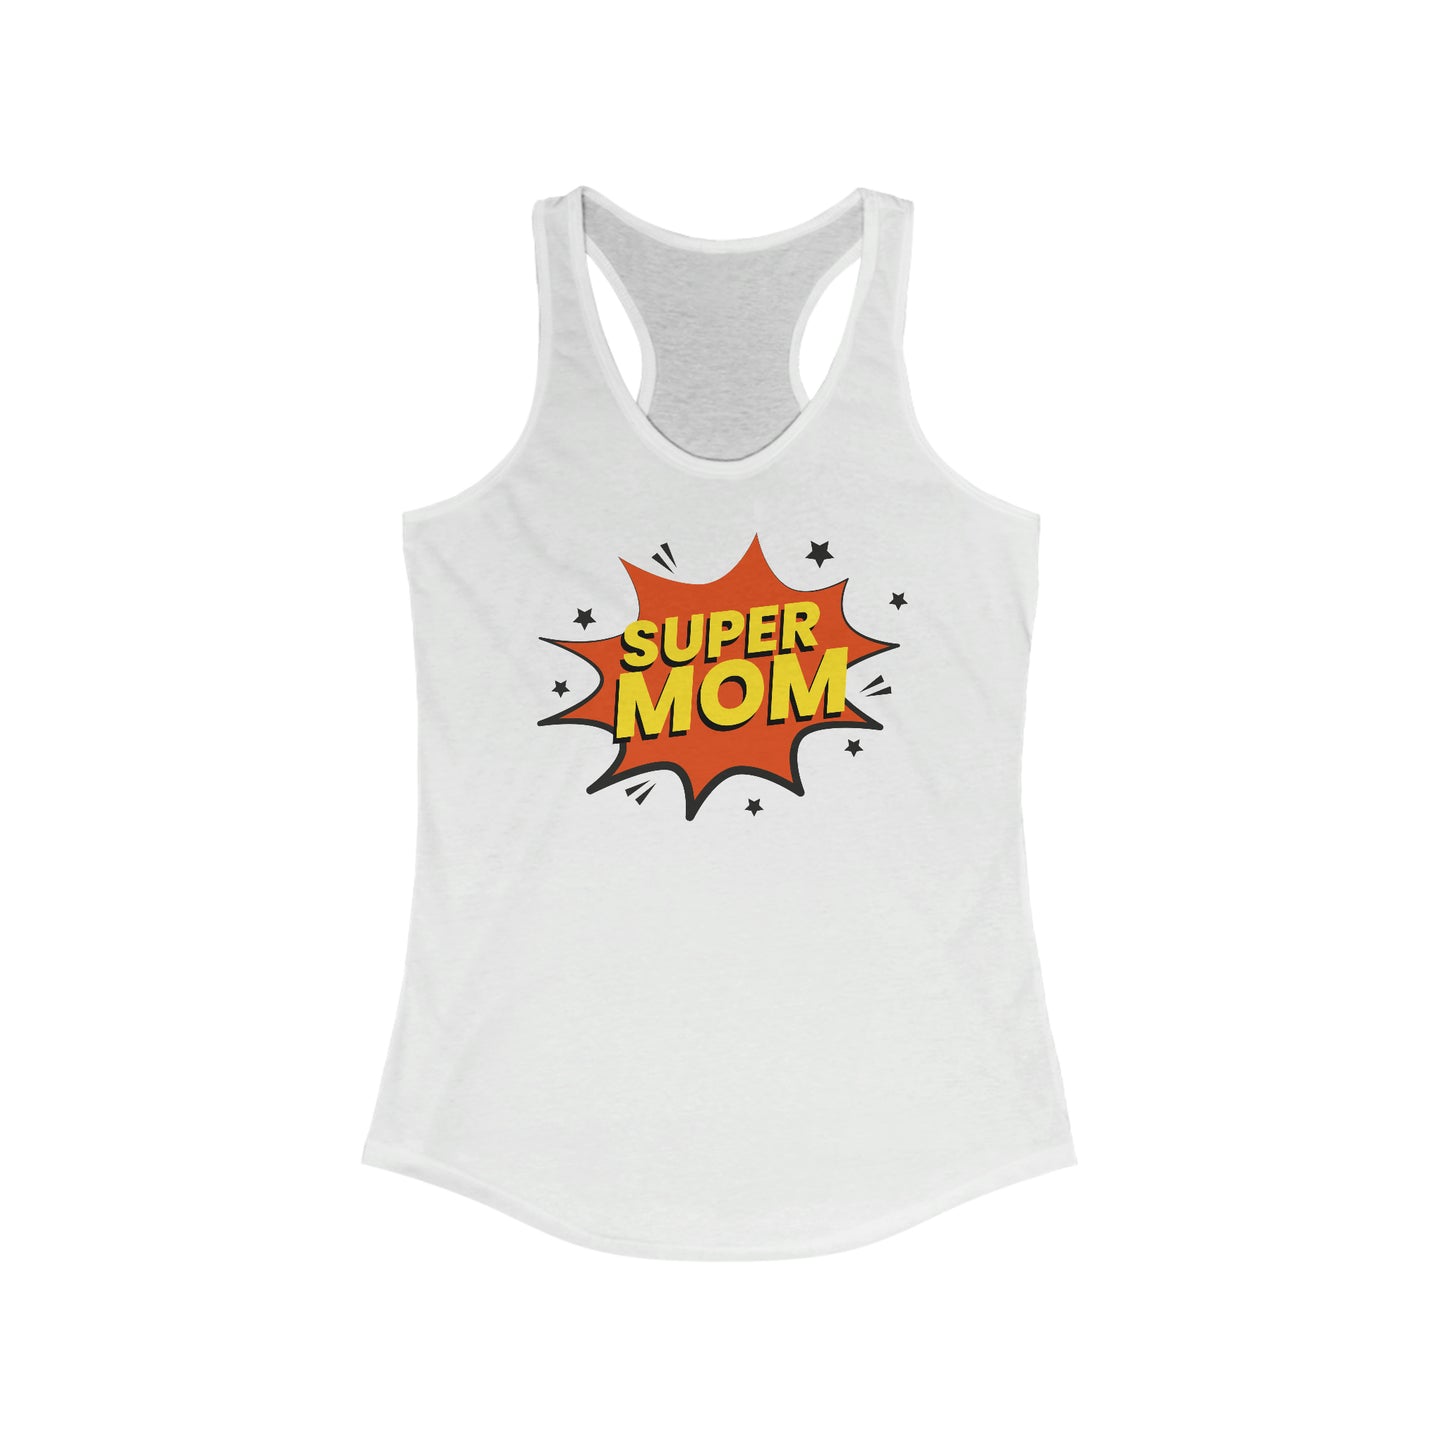 Super Mom Women's Ideal Racerback Tank